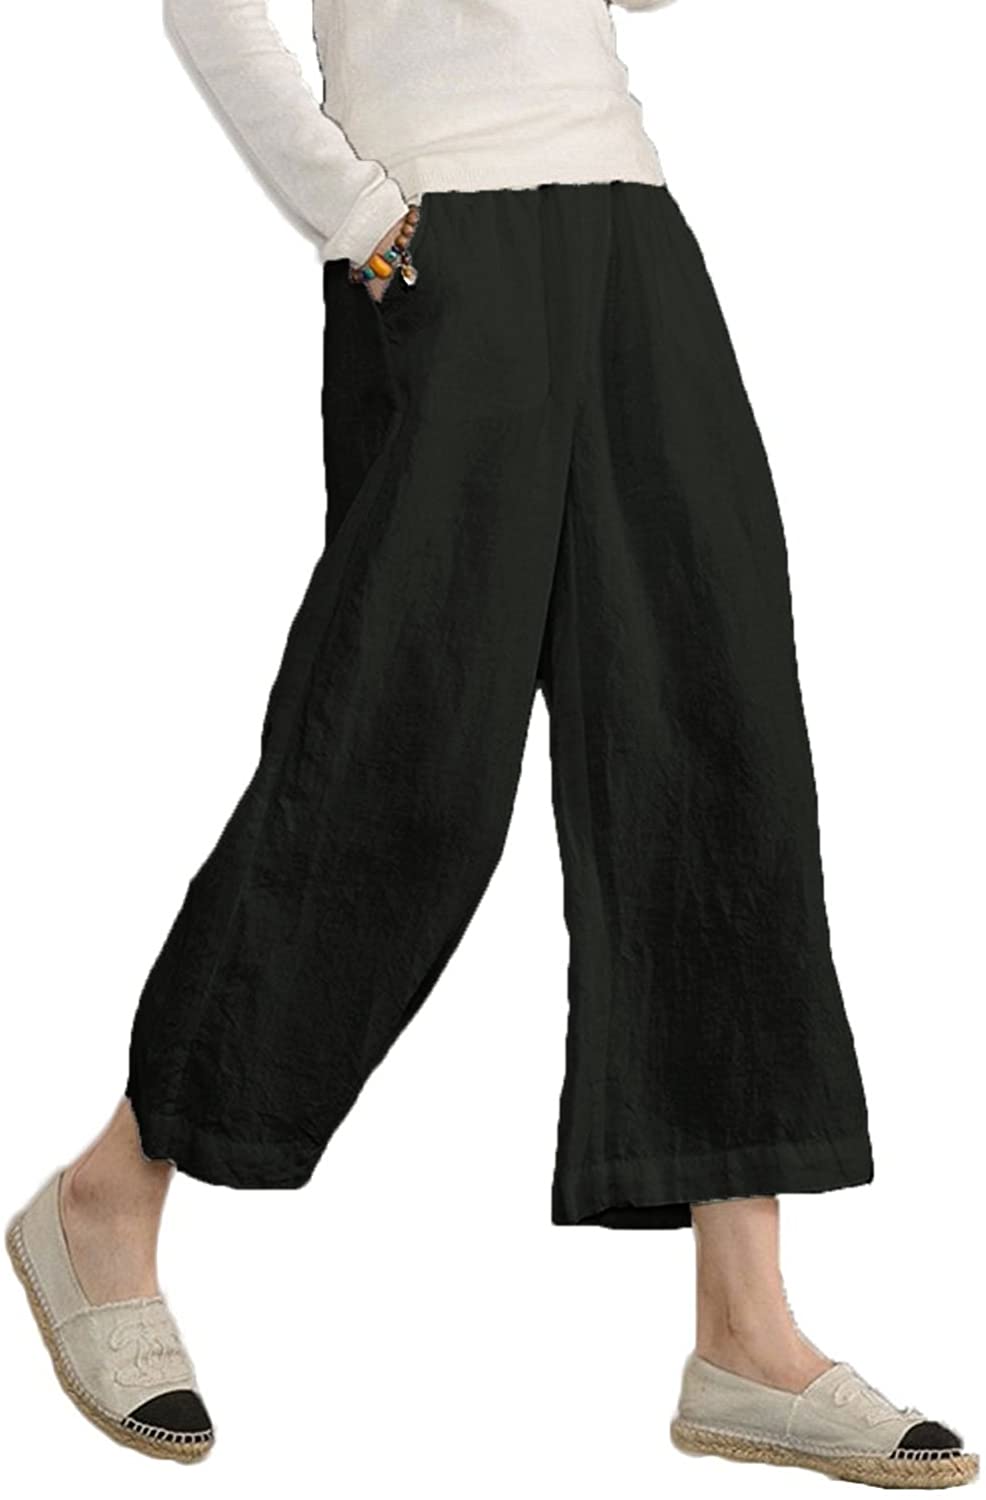 Ecupper Womens Casual Loose Fit Linen Elastic Drawsting Waist Capri Pants  Plus S | eBay